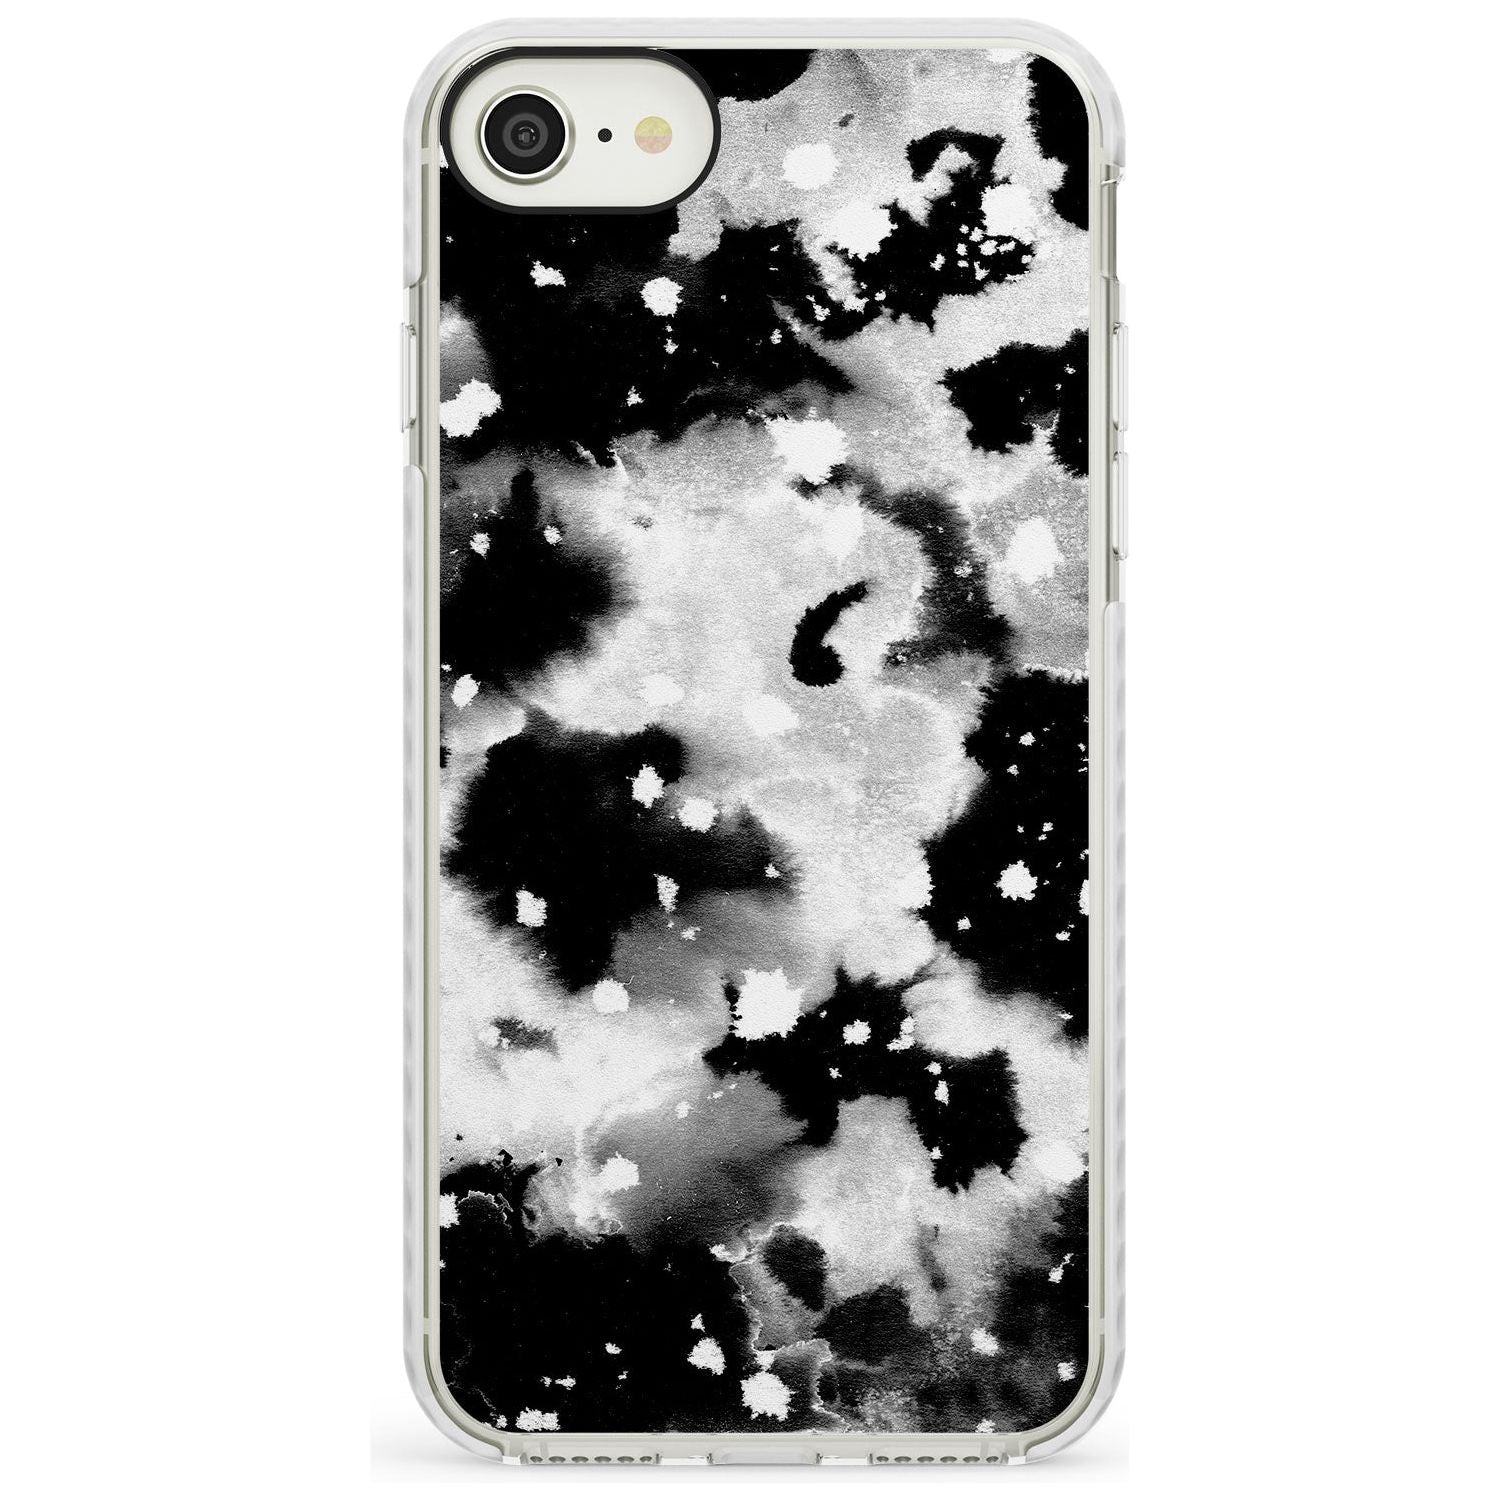 Black & White Acid Wash Tie-Dye Pattern Impact Phone Case for iPhone SE 8 7 Plus